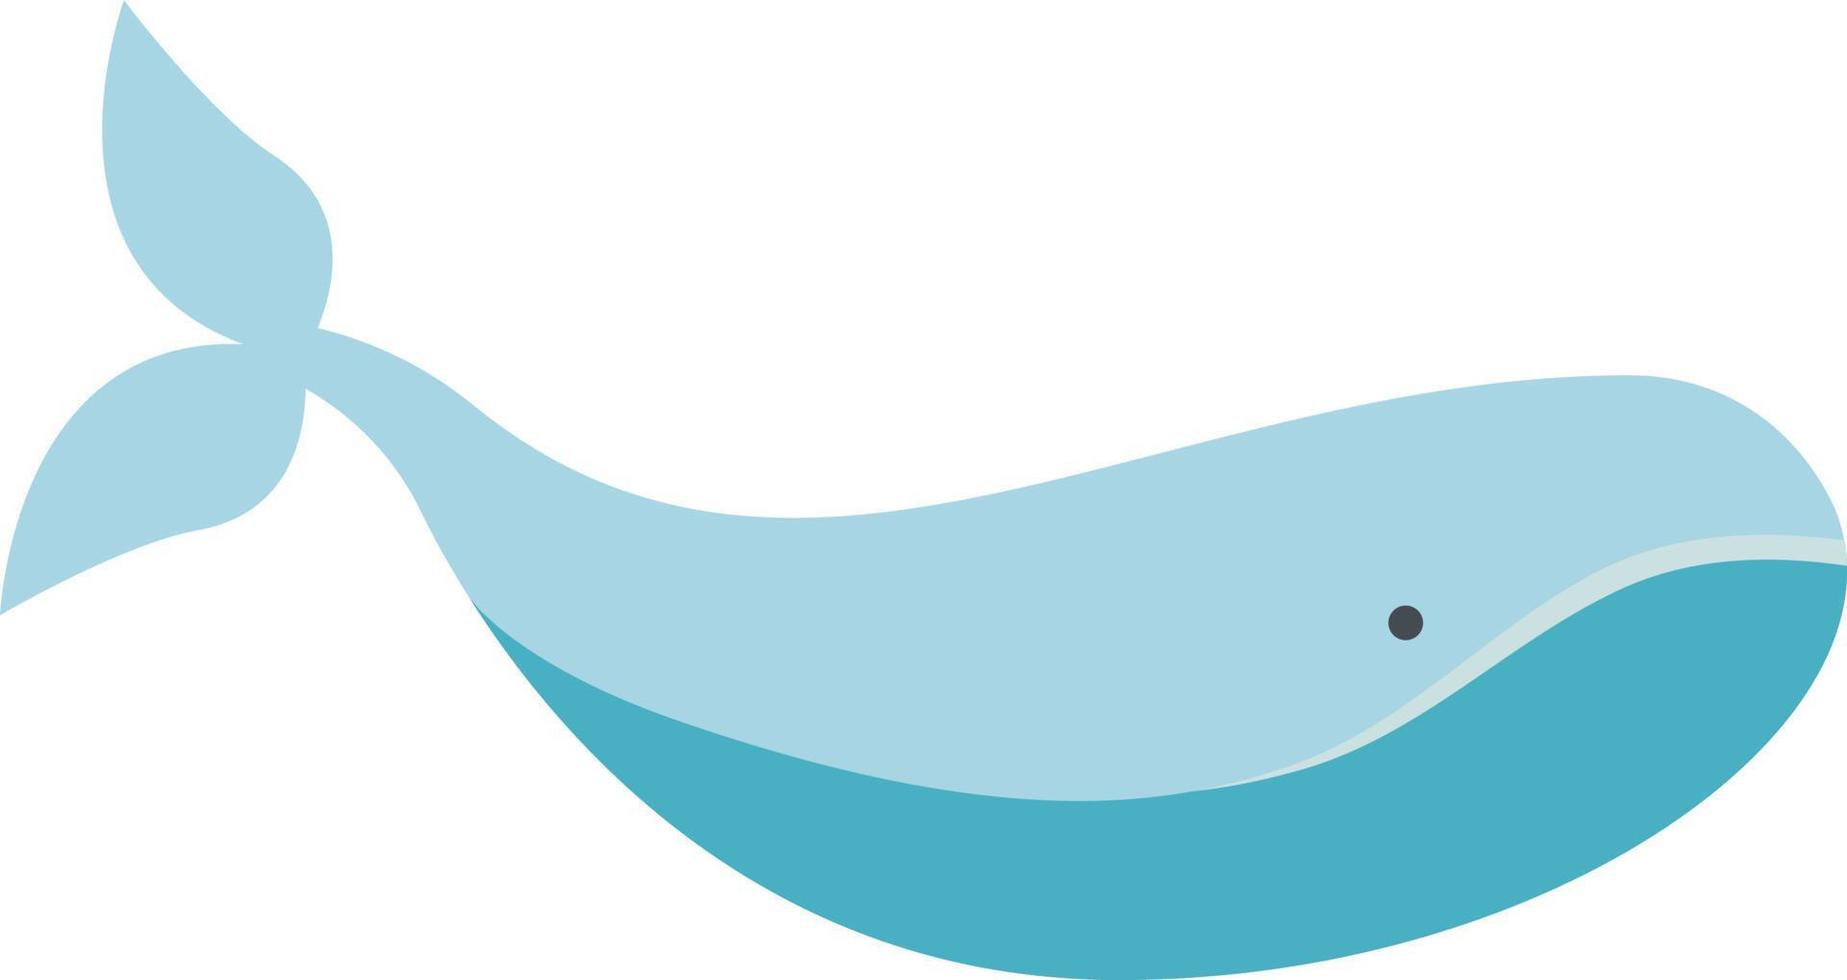 gran ballena azul, ilustración, vector sobre fondo blanco.